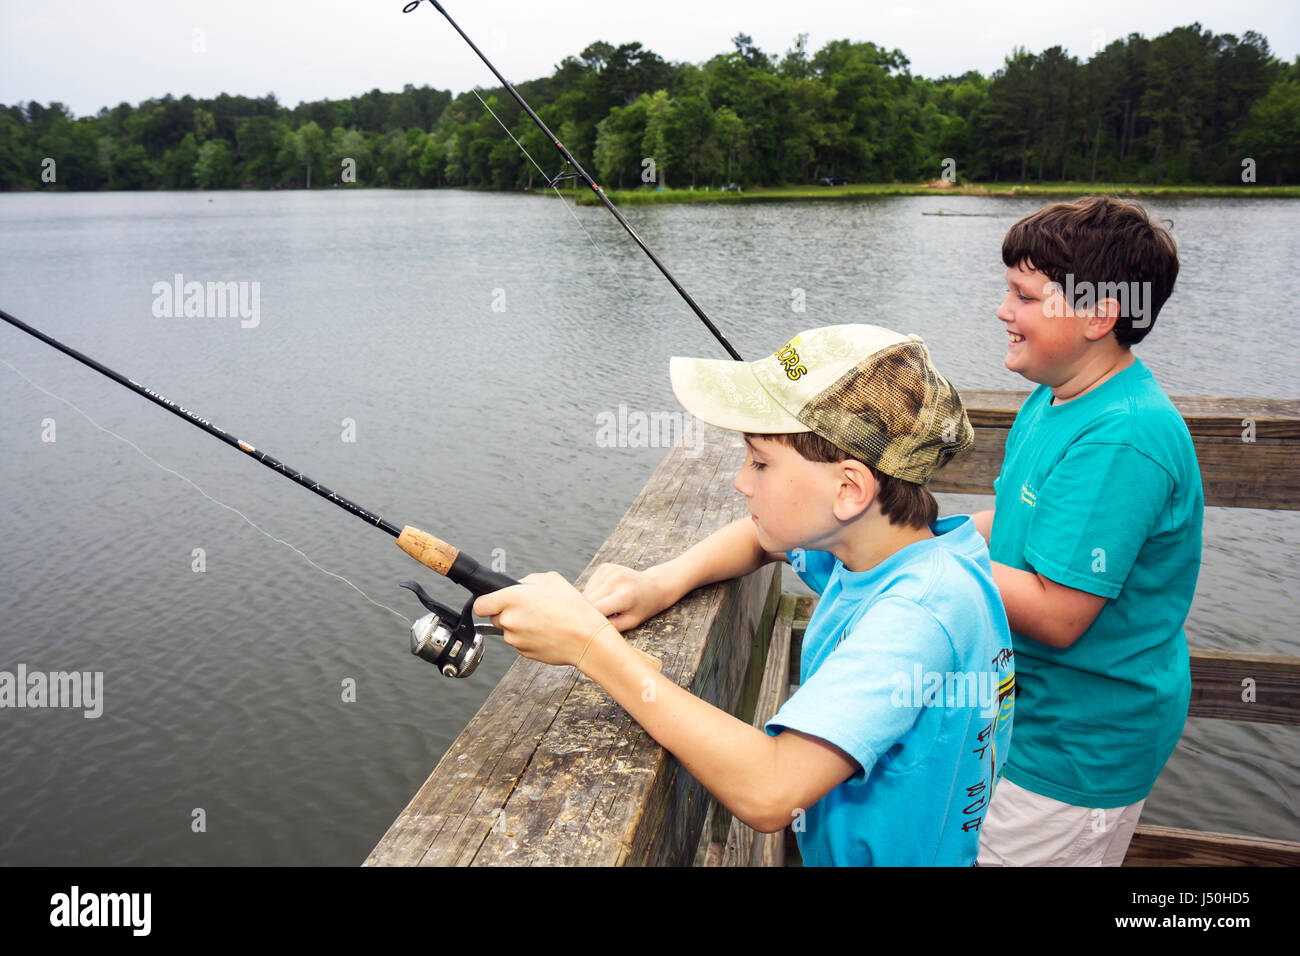 Alabama,Millry,Emmett Wood State Lake,fishing,boy boys,male kid kids child children youngster,kids,rod,reel,angler,water sport,recreation,hobby,AL0805 Stock Photo